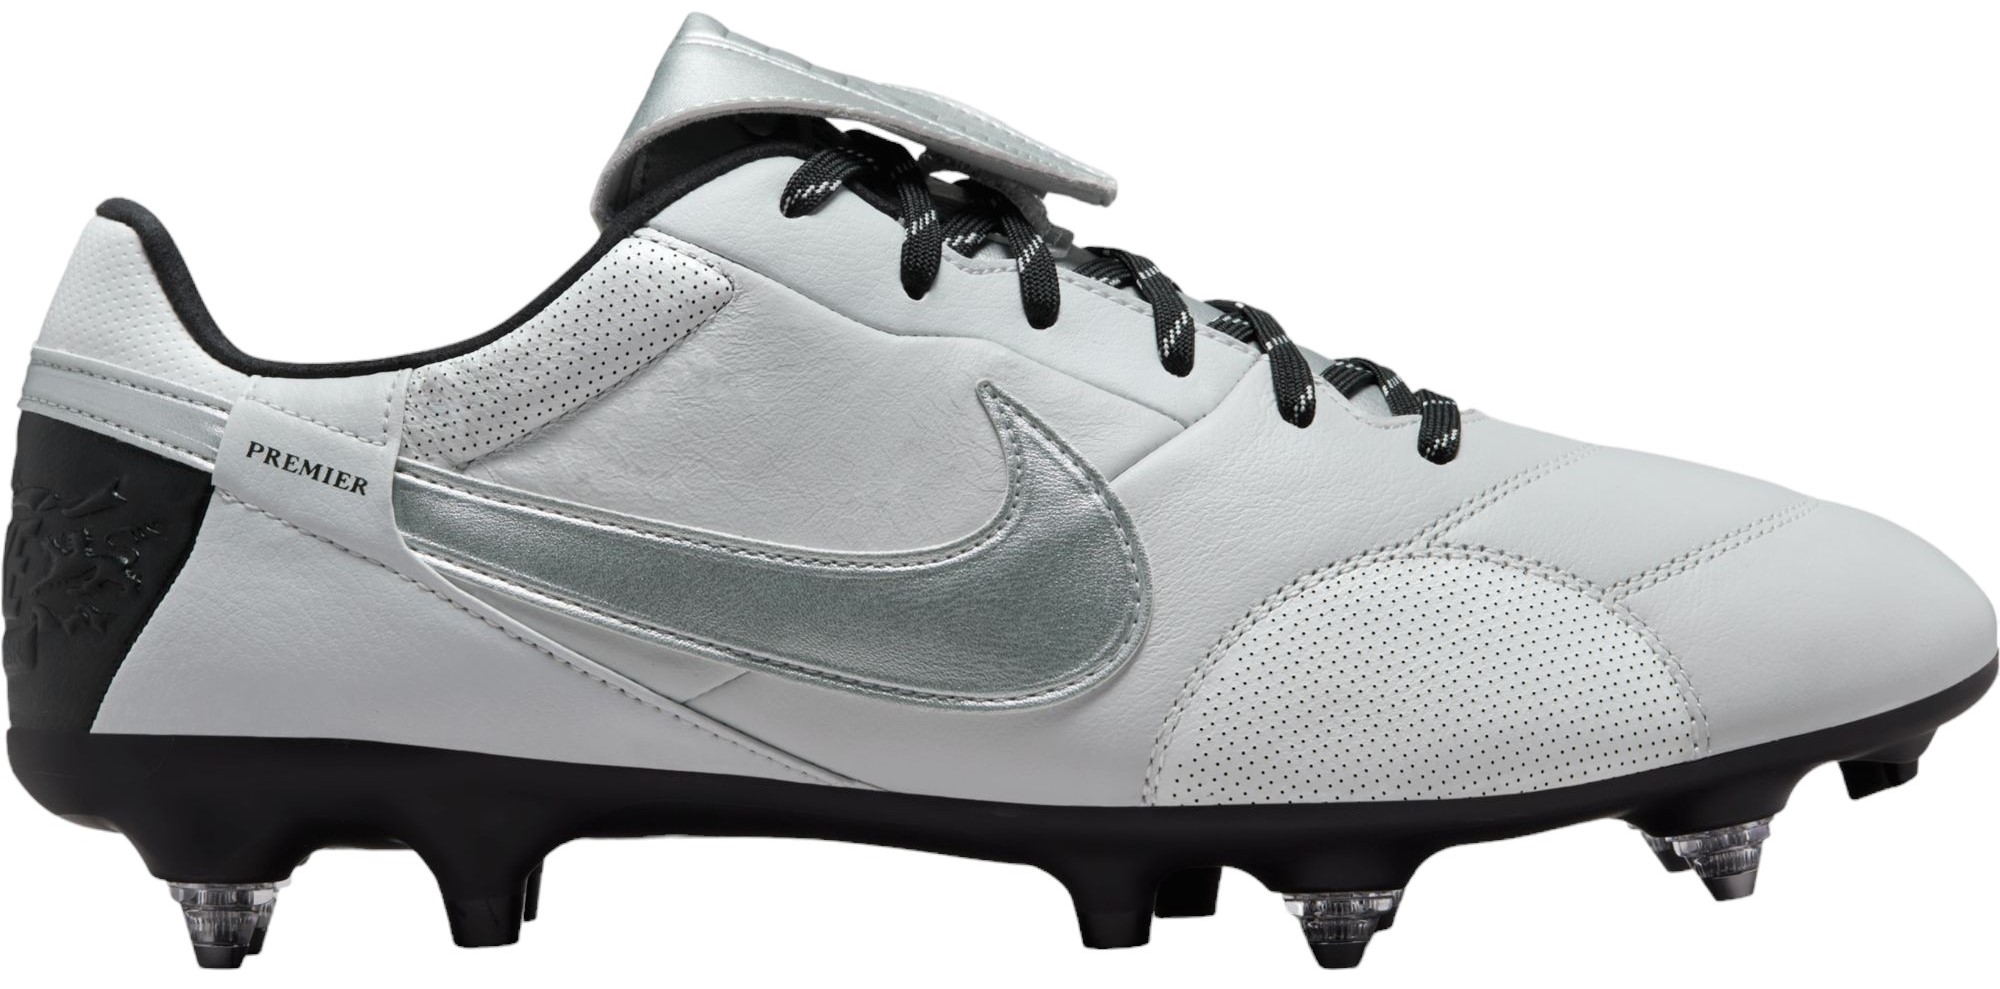 Football shoes Nike THE PREMIER III SG-PRO AC